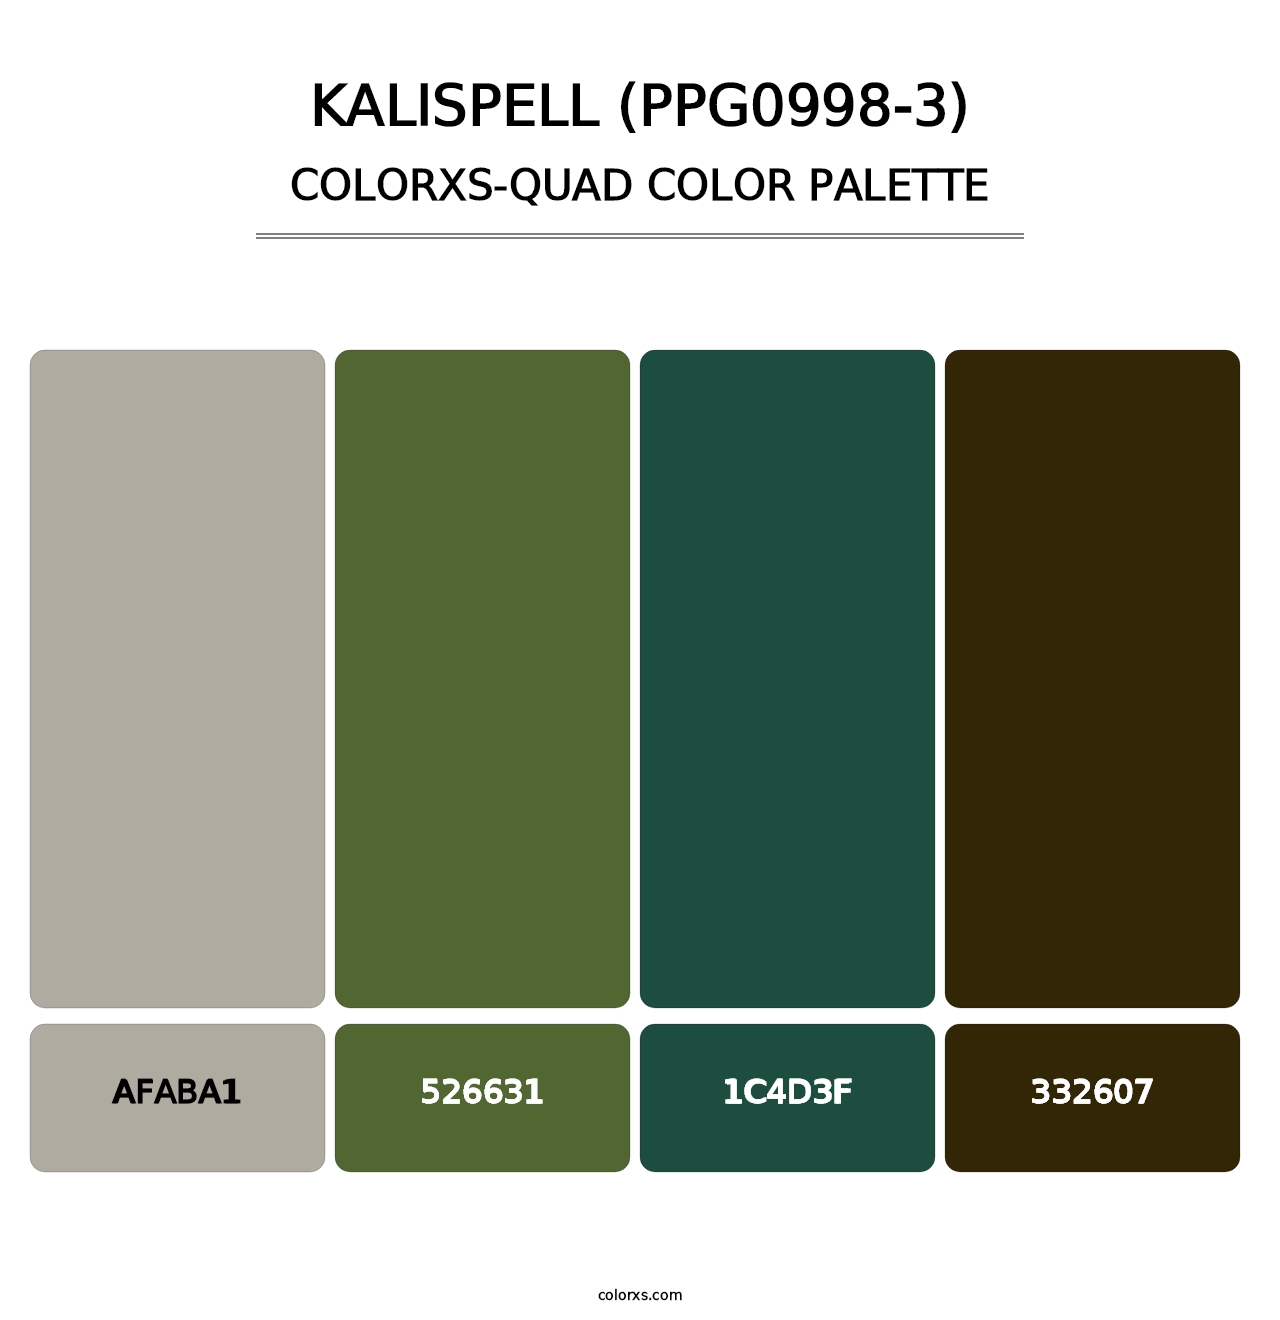 Kalispell (PPG0998-3) - Colorxs Quad Palette